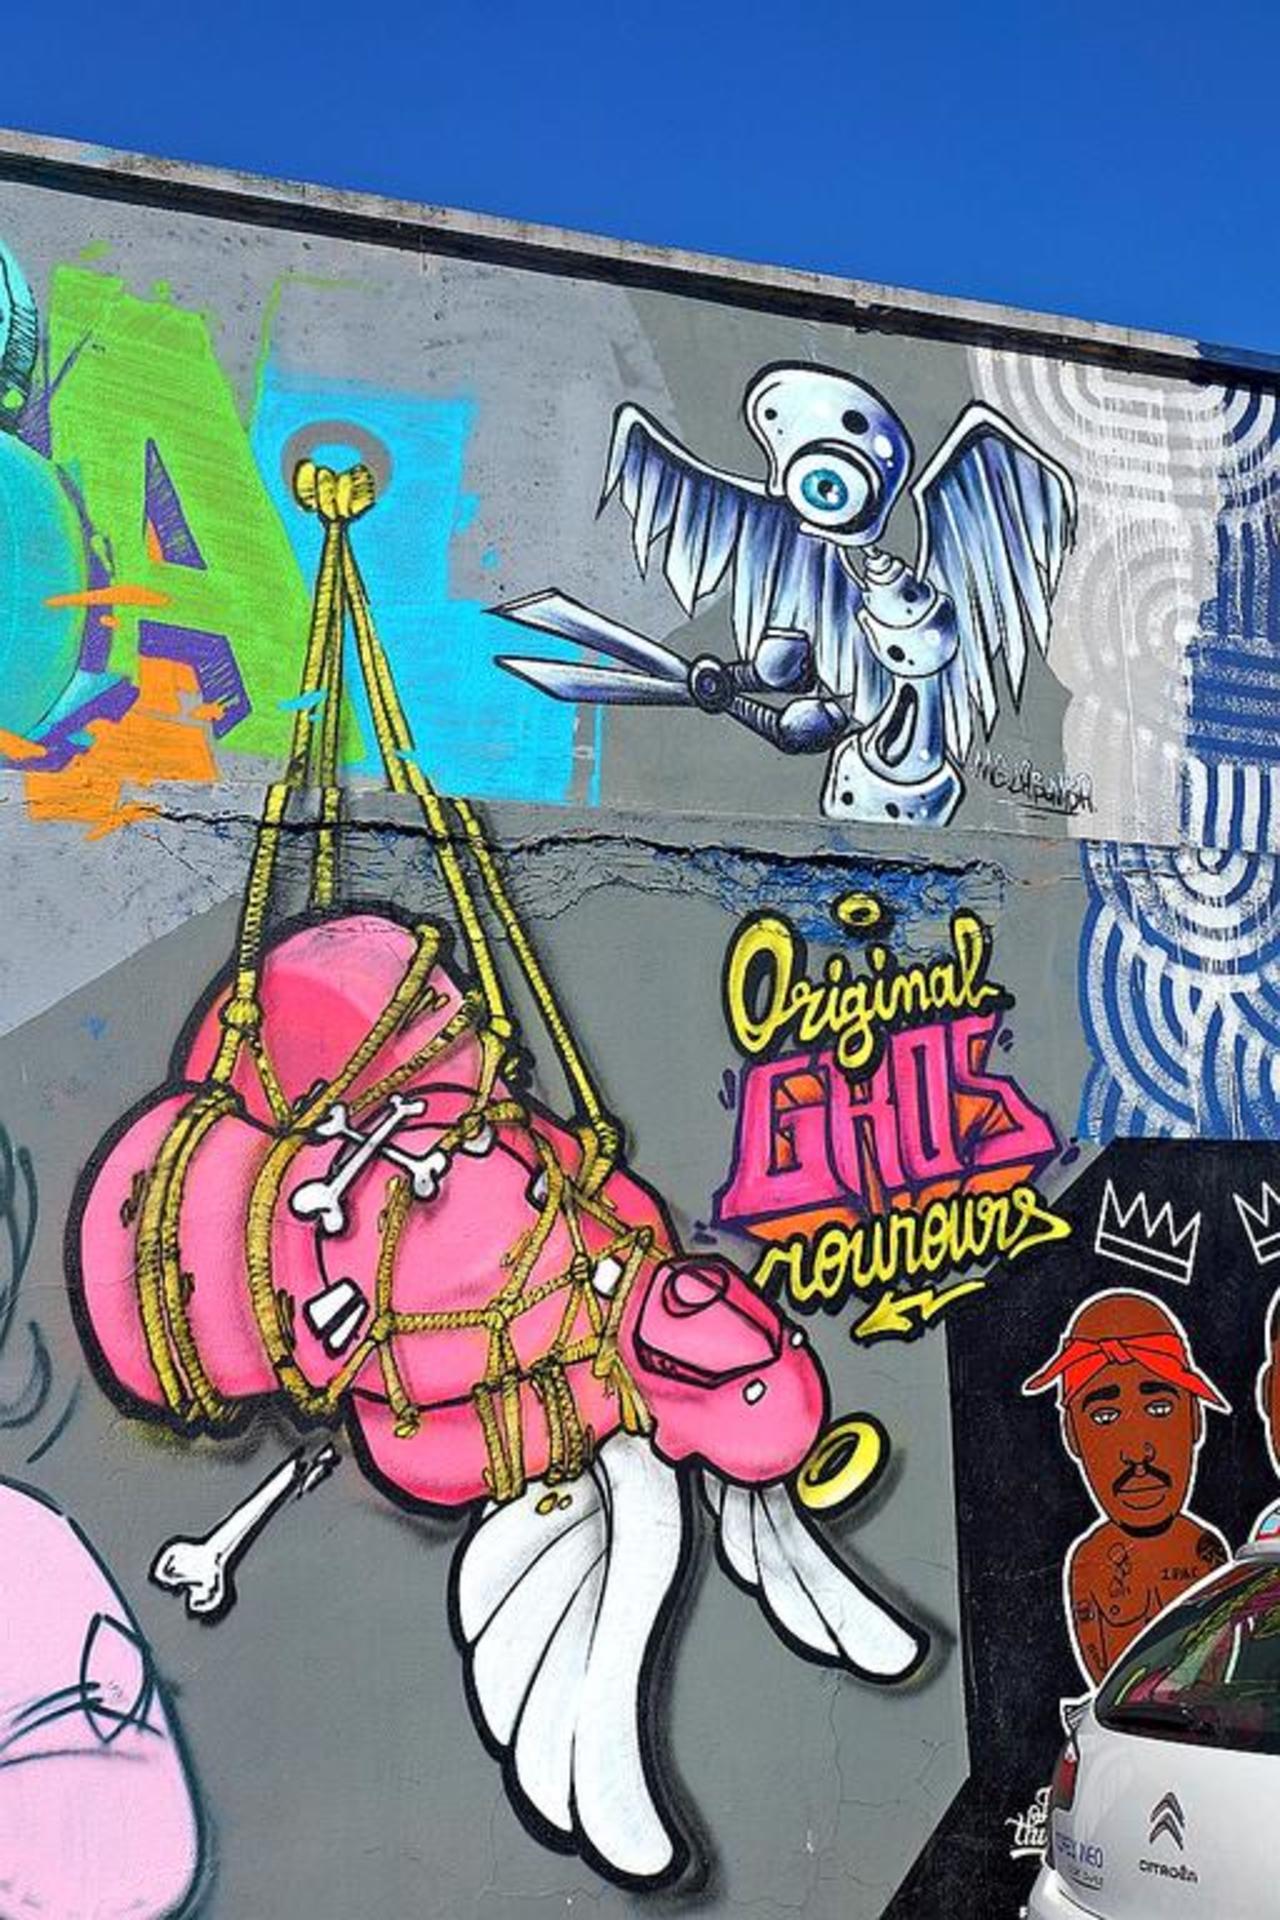 Street Art by anonymous in #Montreuil http://www.urbacolors.com #art #mural #graffiti #streetart http://t.co/pItjuGnN7a